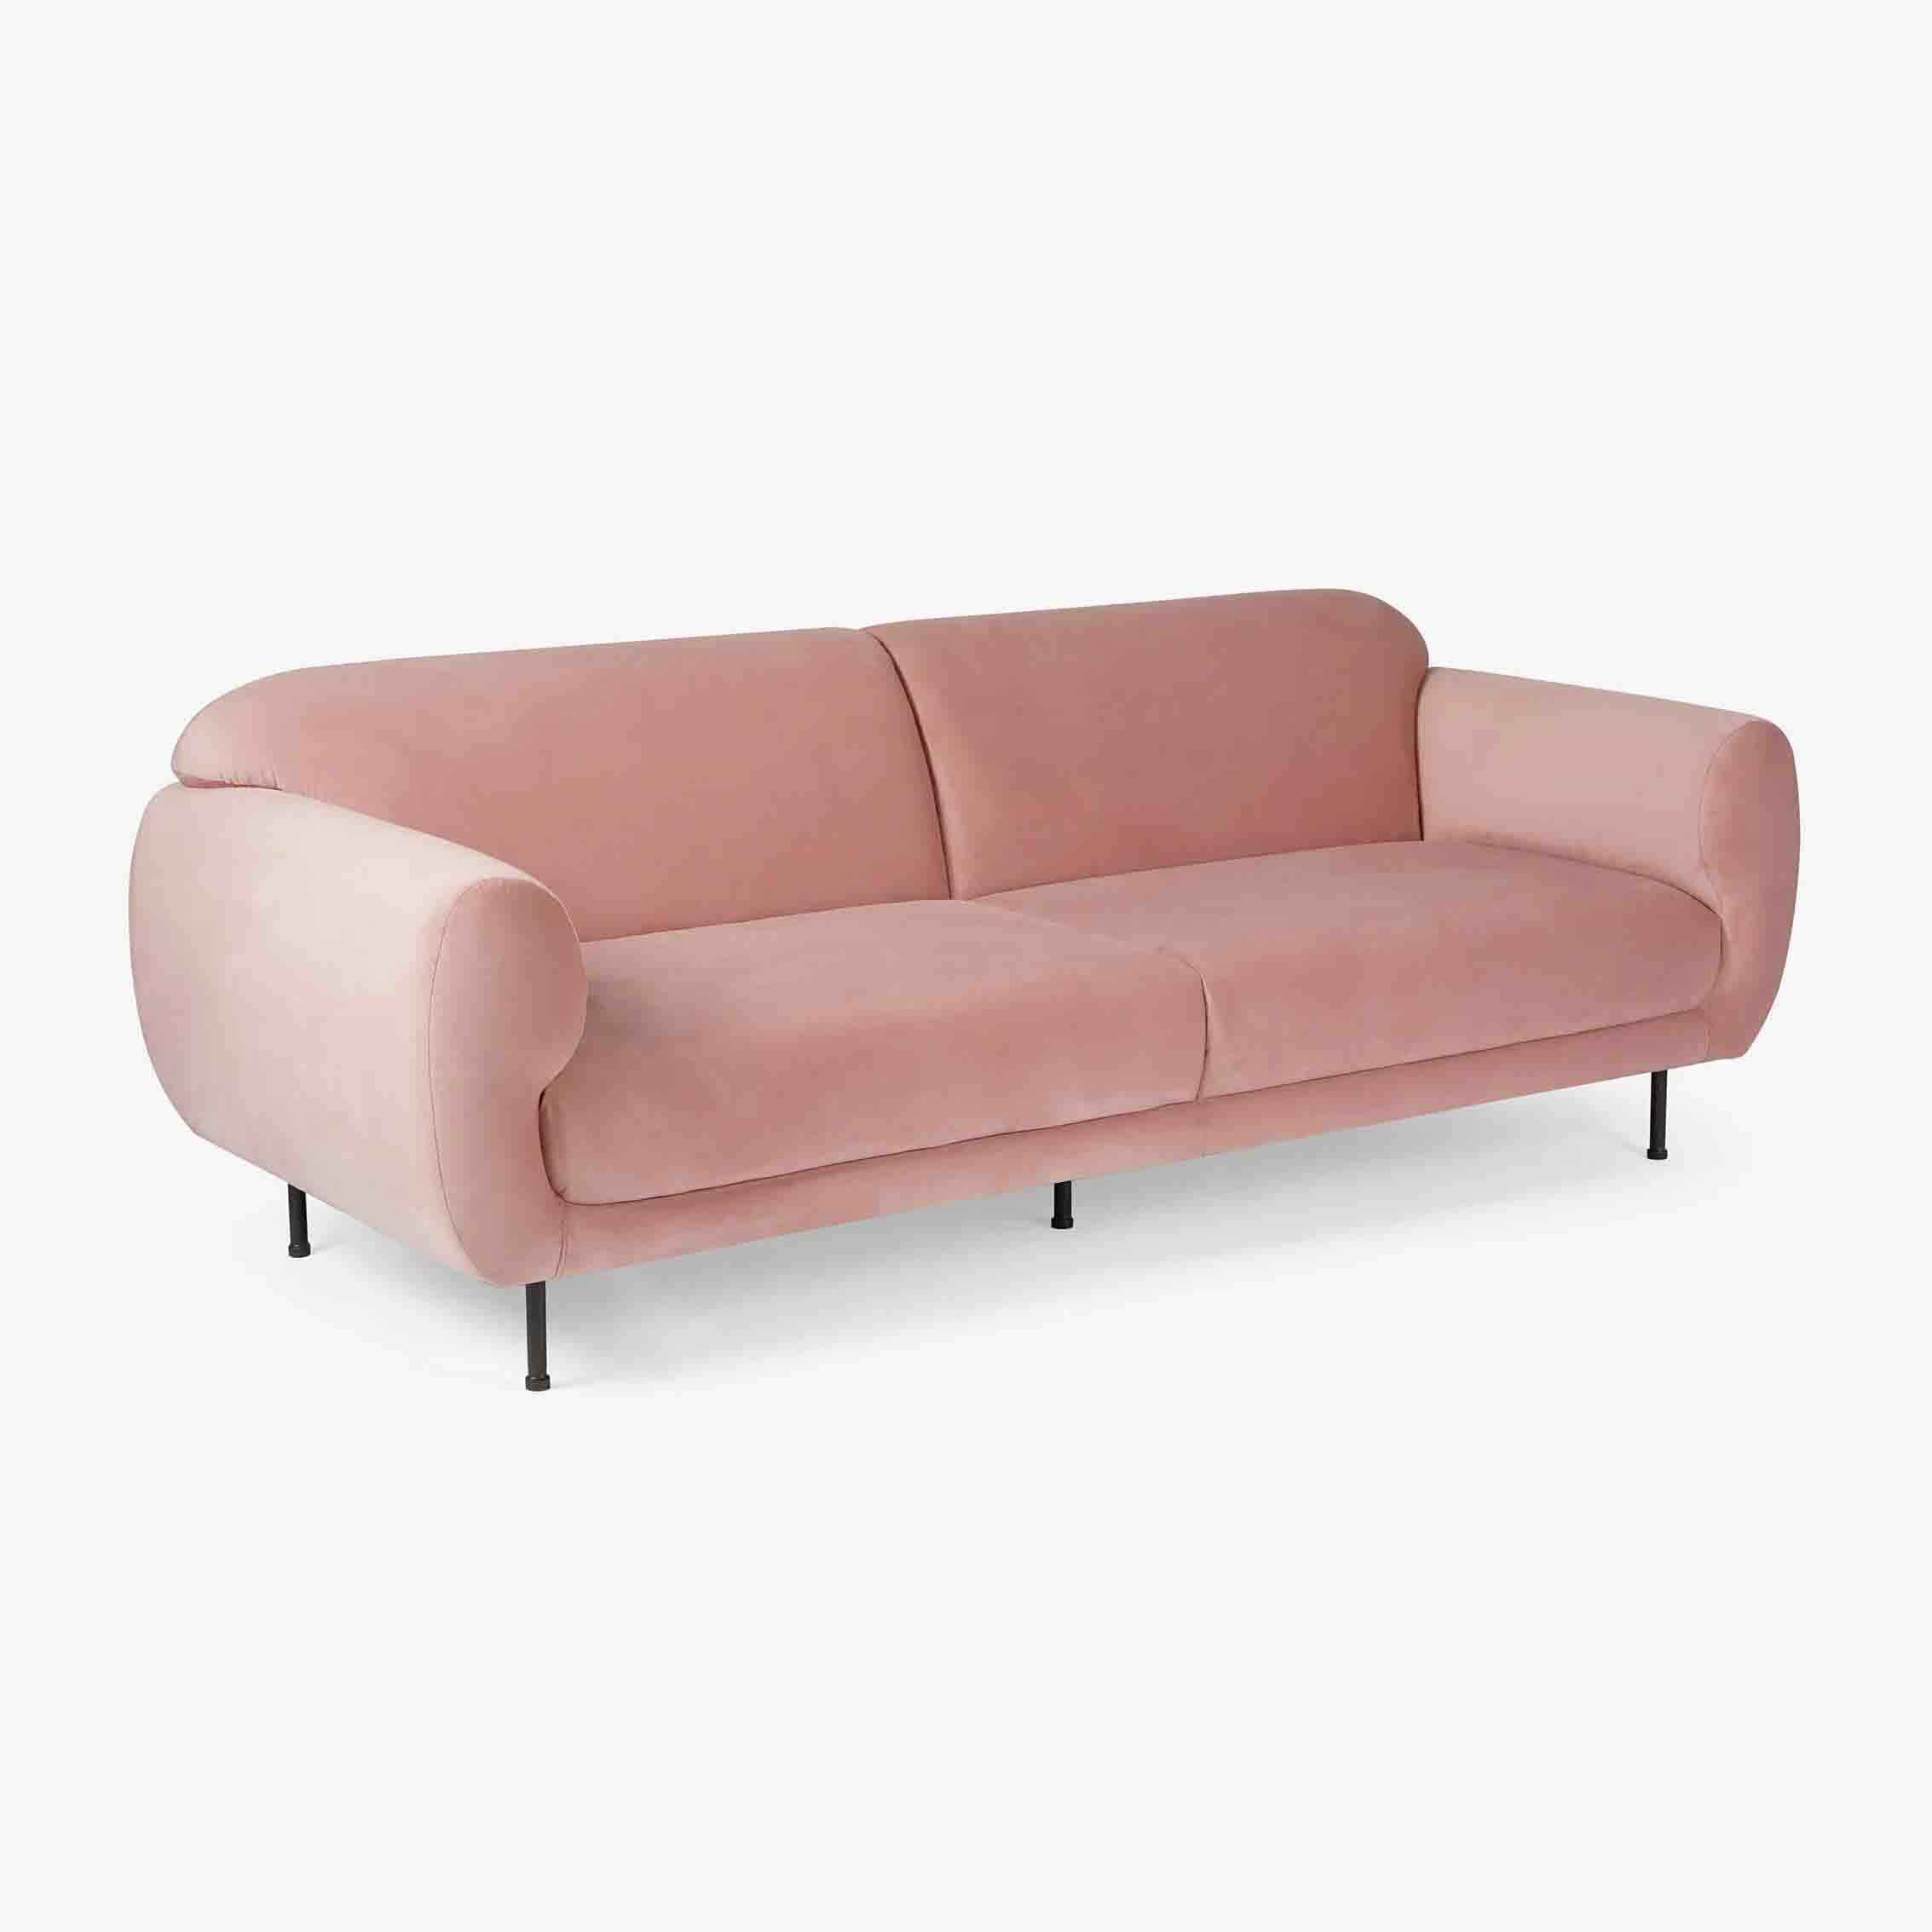 Dawson Extended Sofa With Ottoman